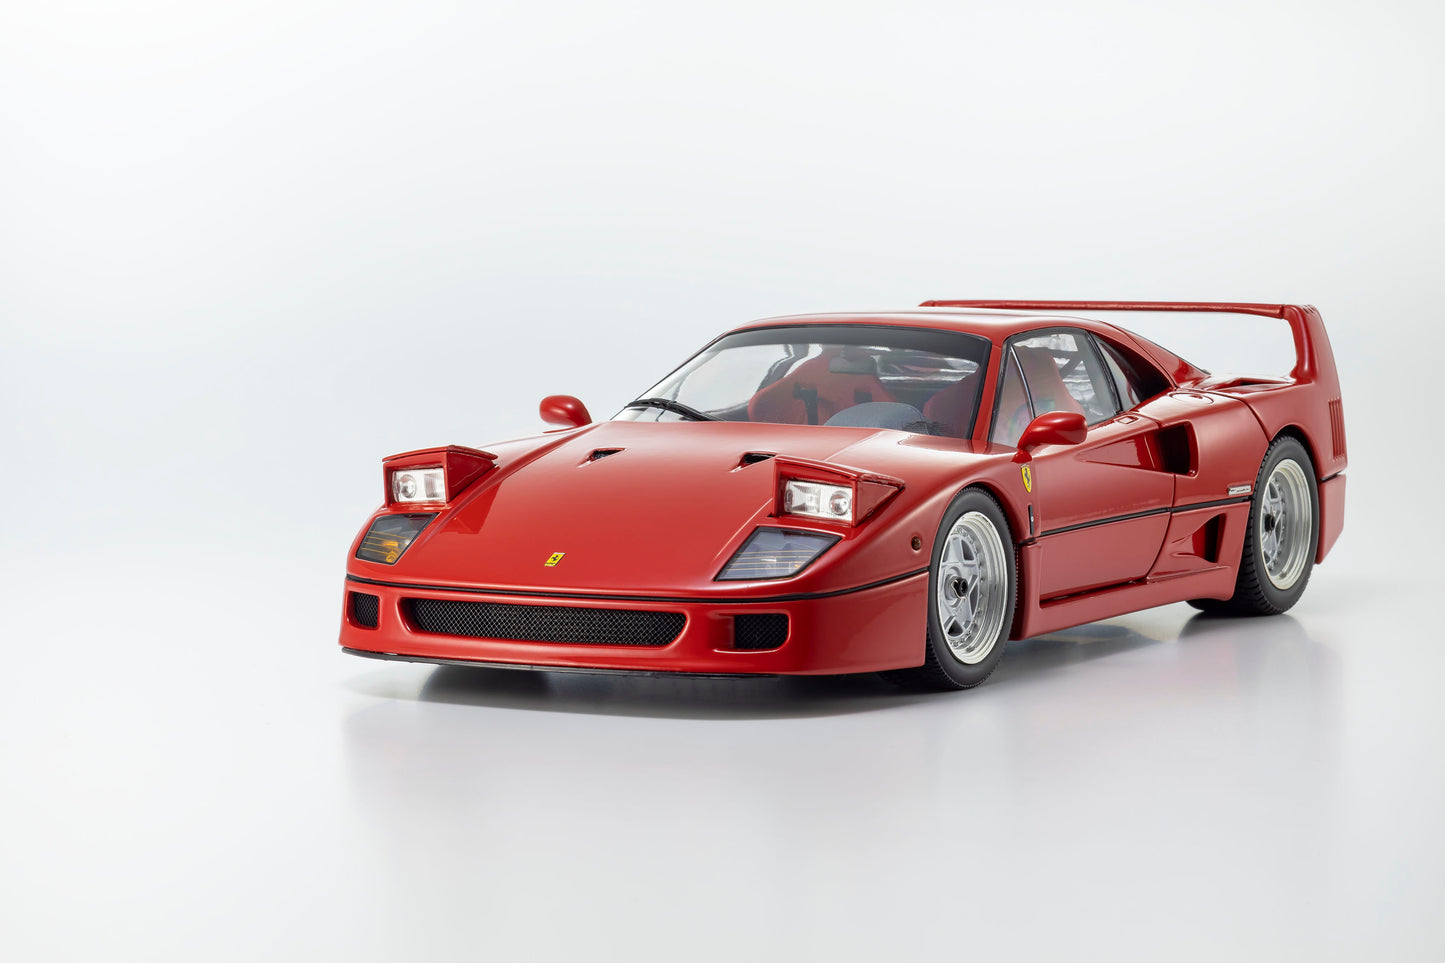 Kyosho - Ferrari F40 Street (Rosso Corsa Red) 1:18 Scale Model Car